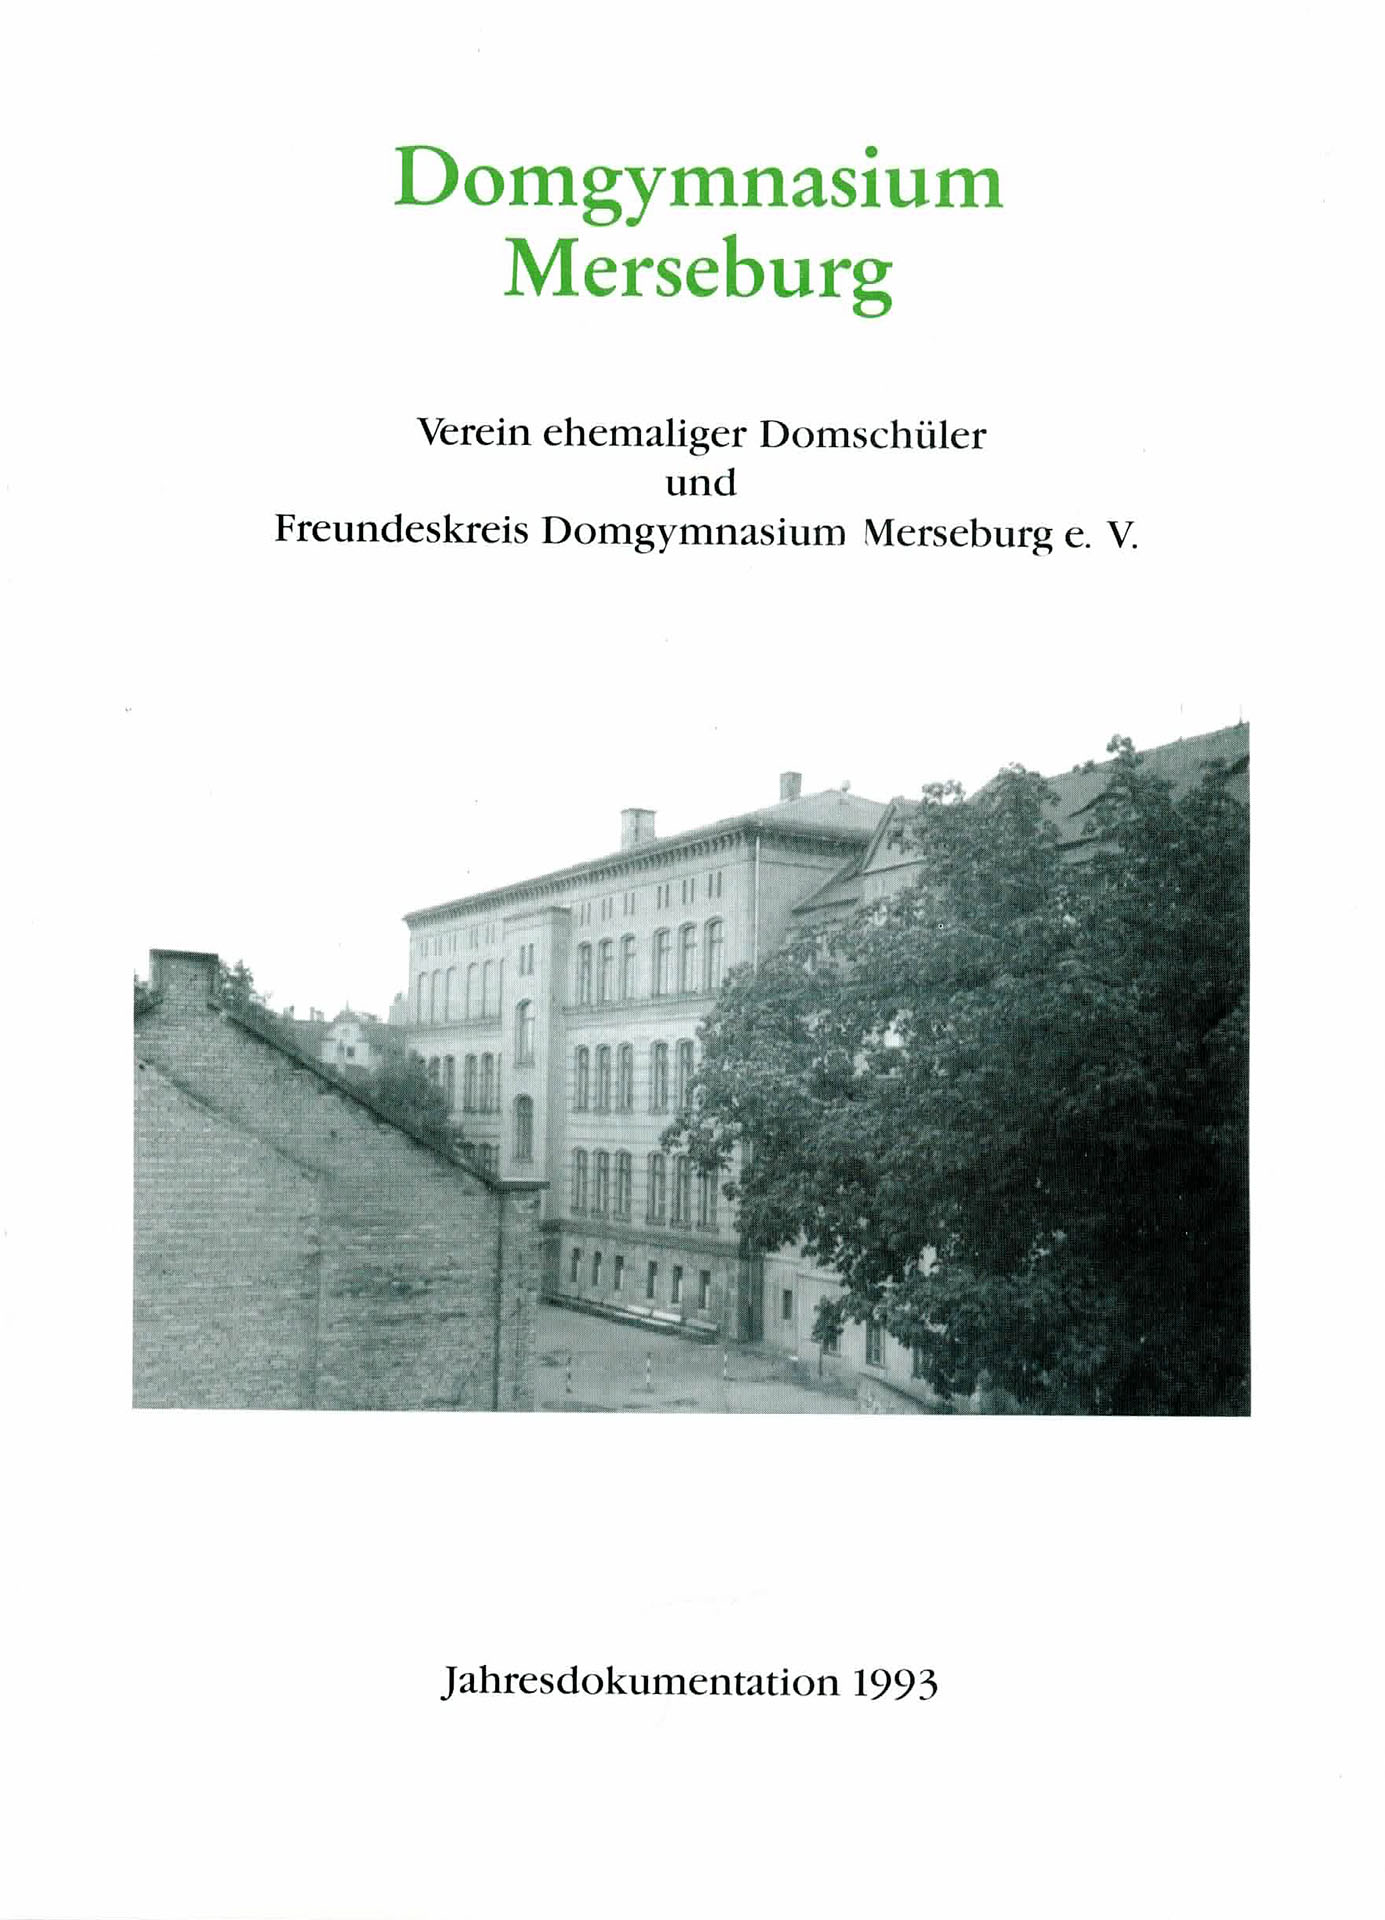 Domgymnasium Merseburg - Jahresdokumentation 1993